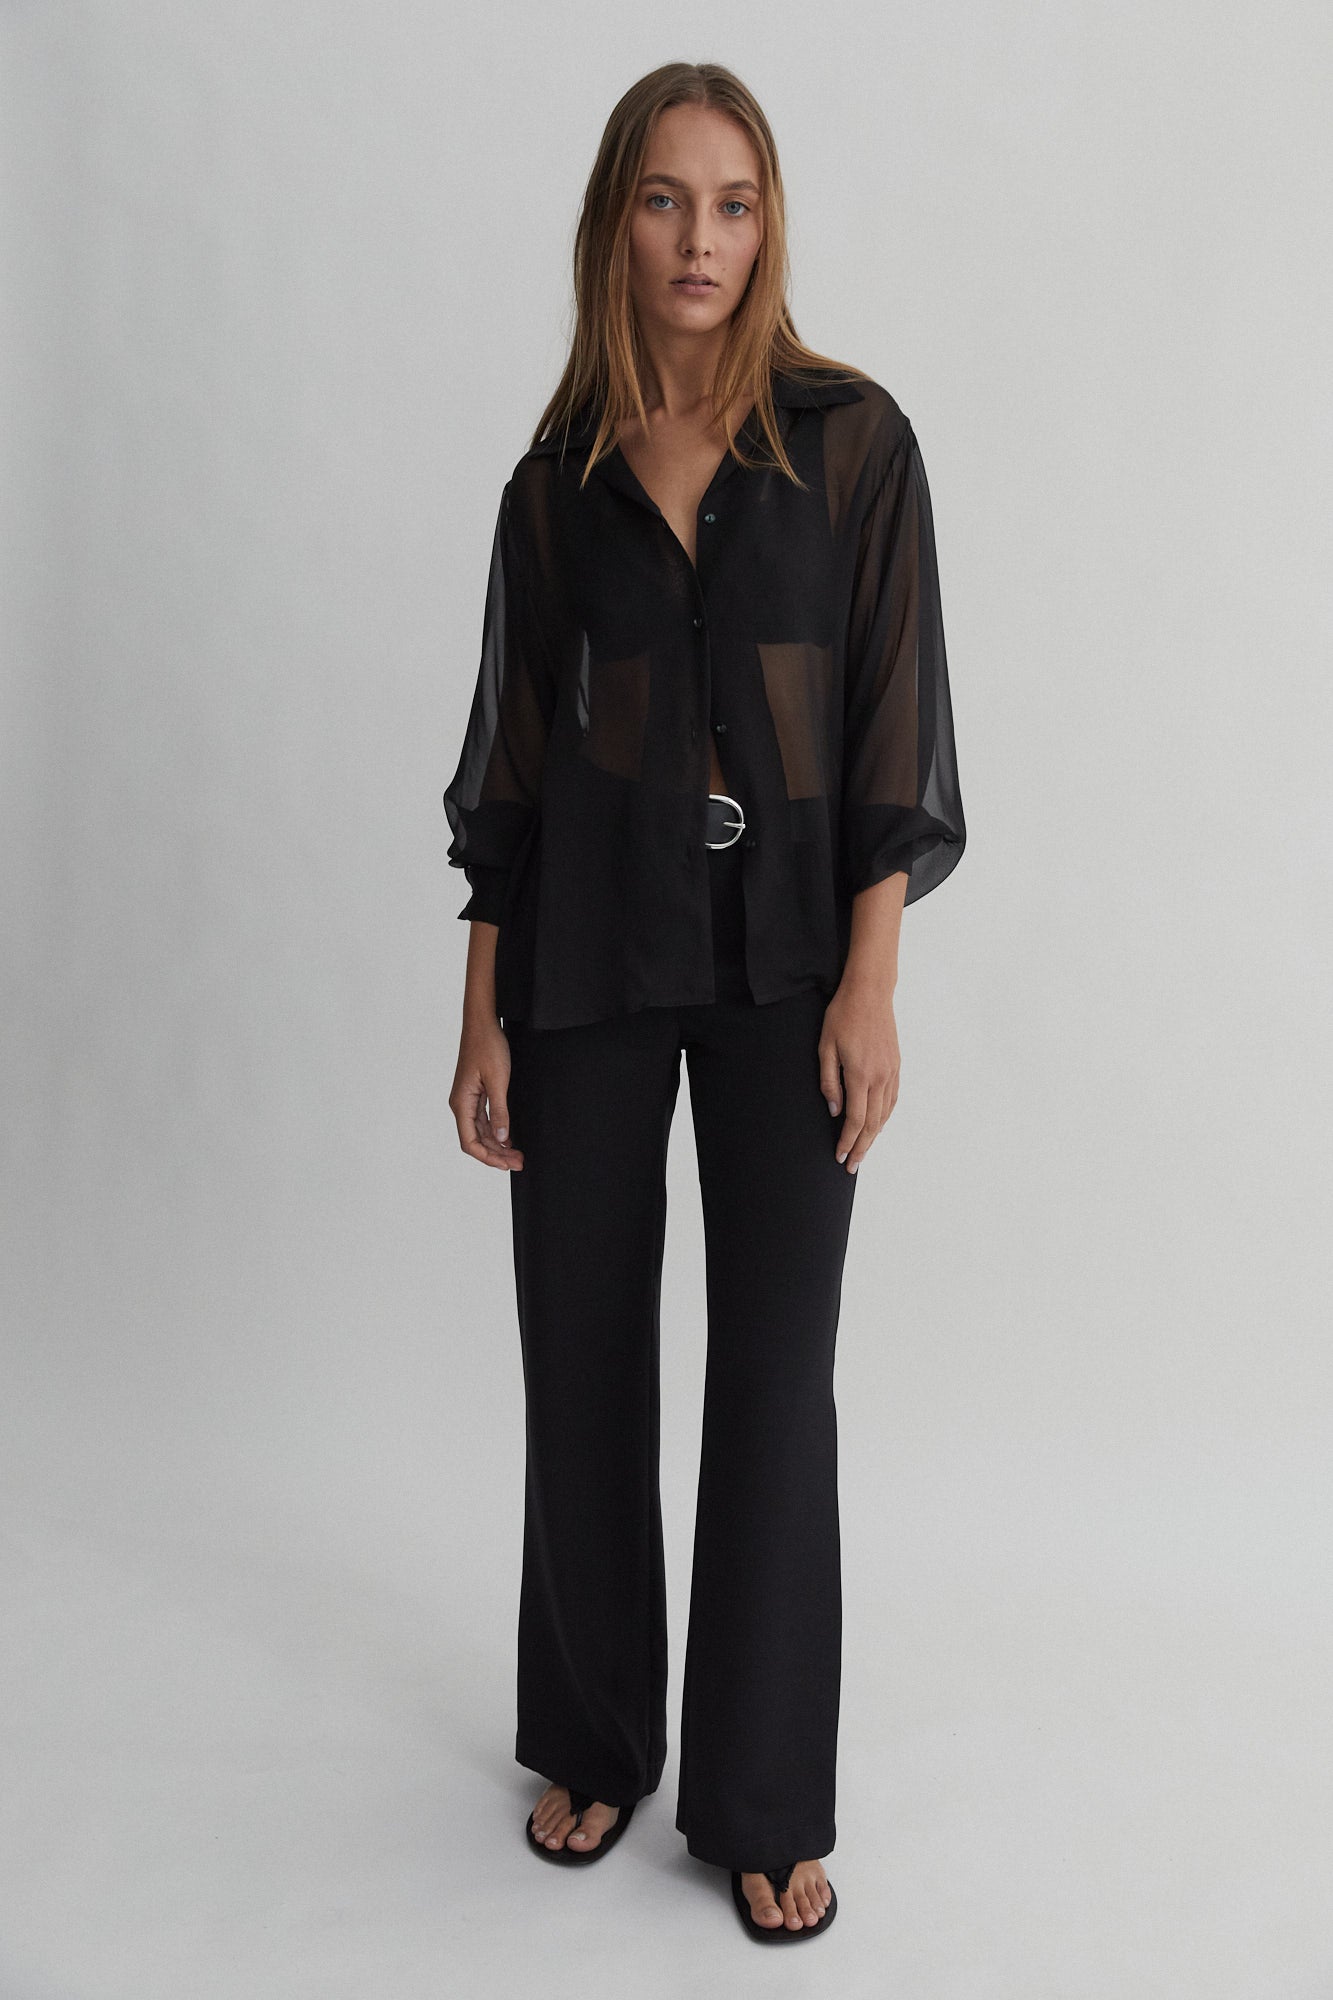 SAINT Lookbook Classic Silk Shirt in black sheer chiffon, long sleeve button up. Made in Australia